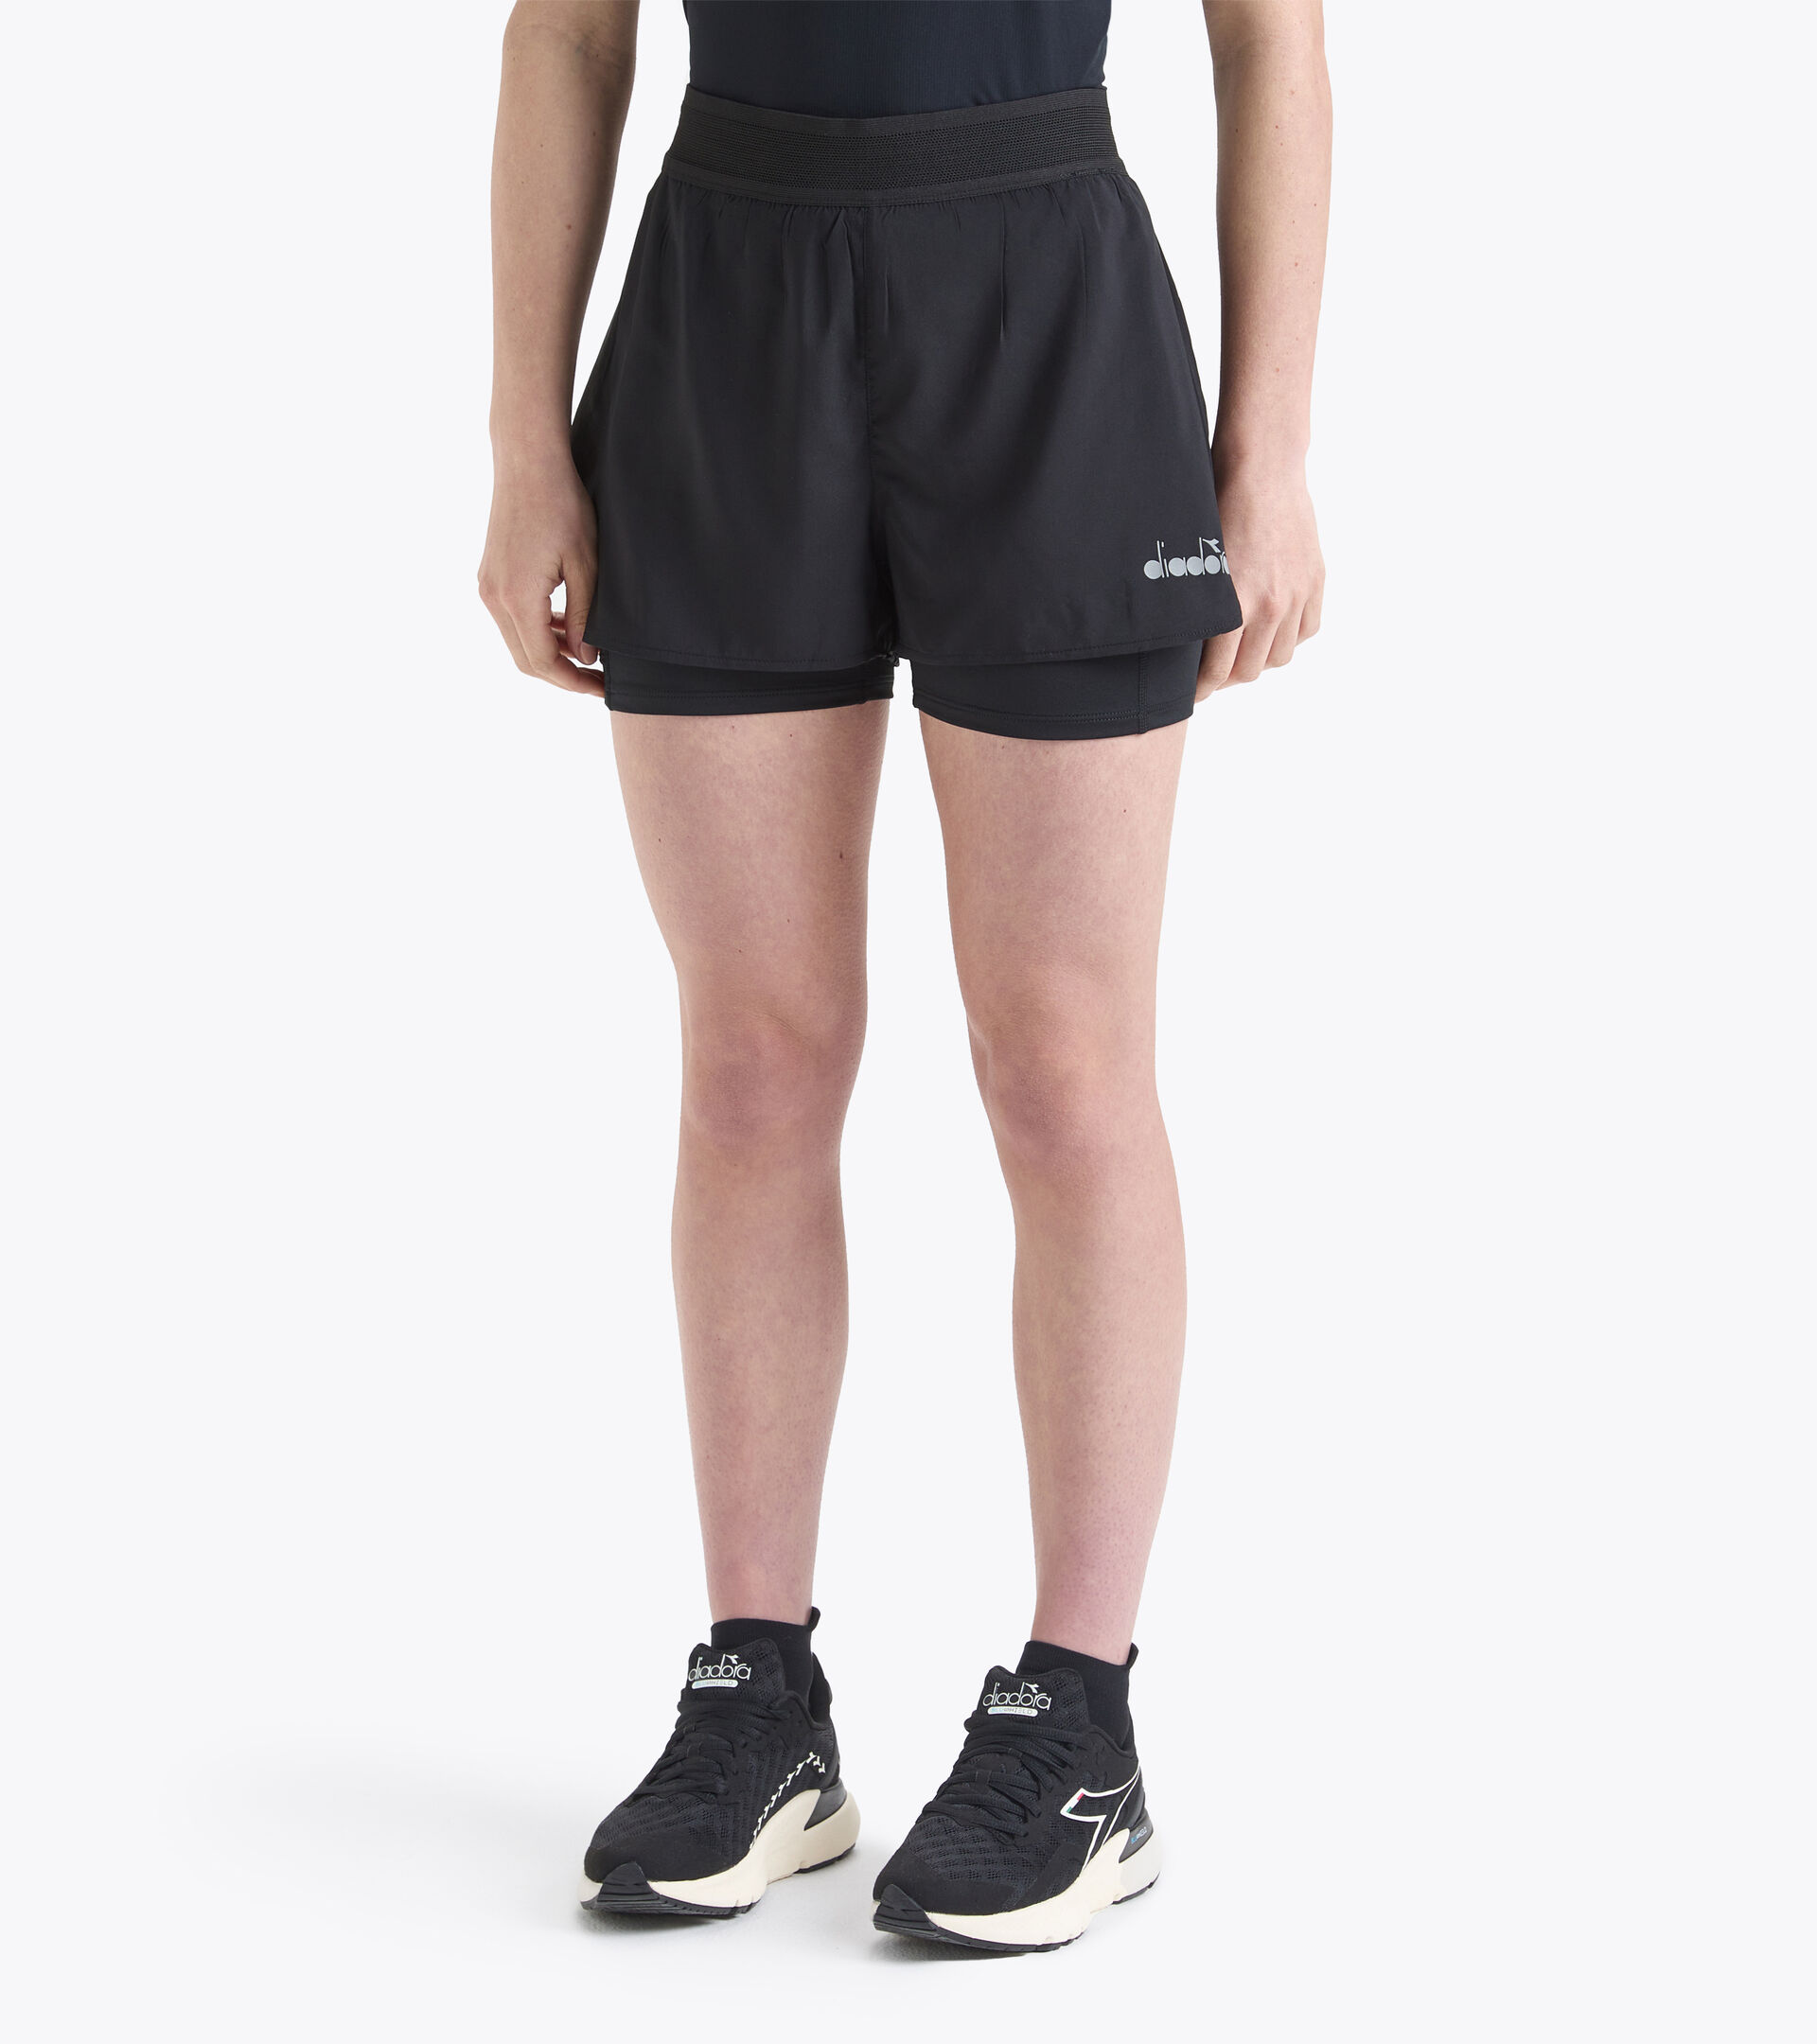 Double-layered running shorts - Black - Ladies